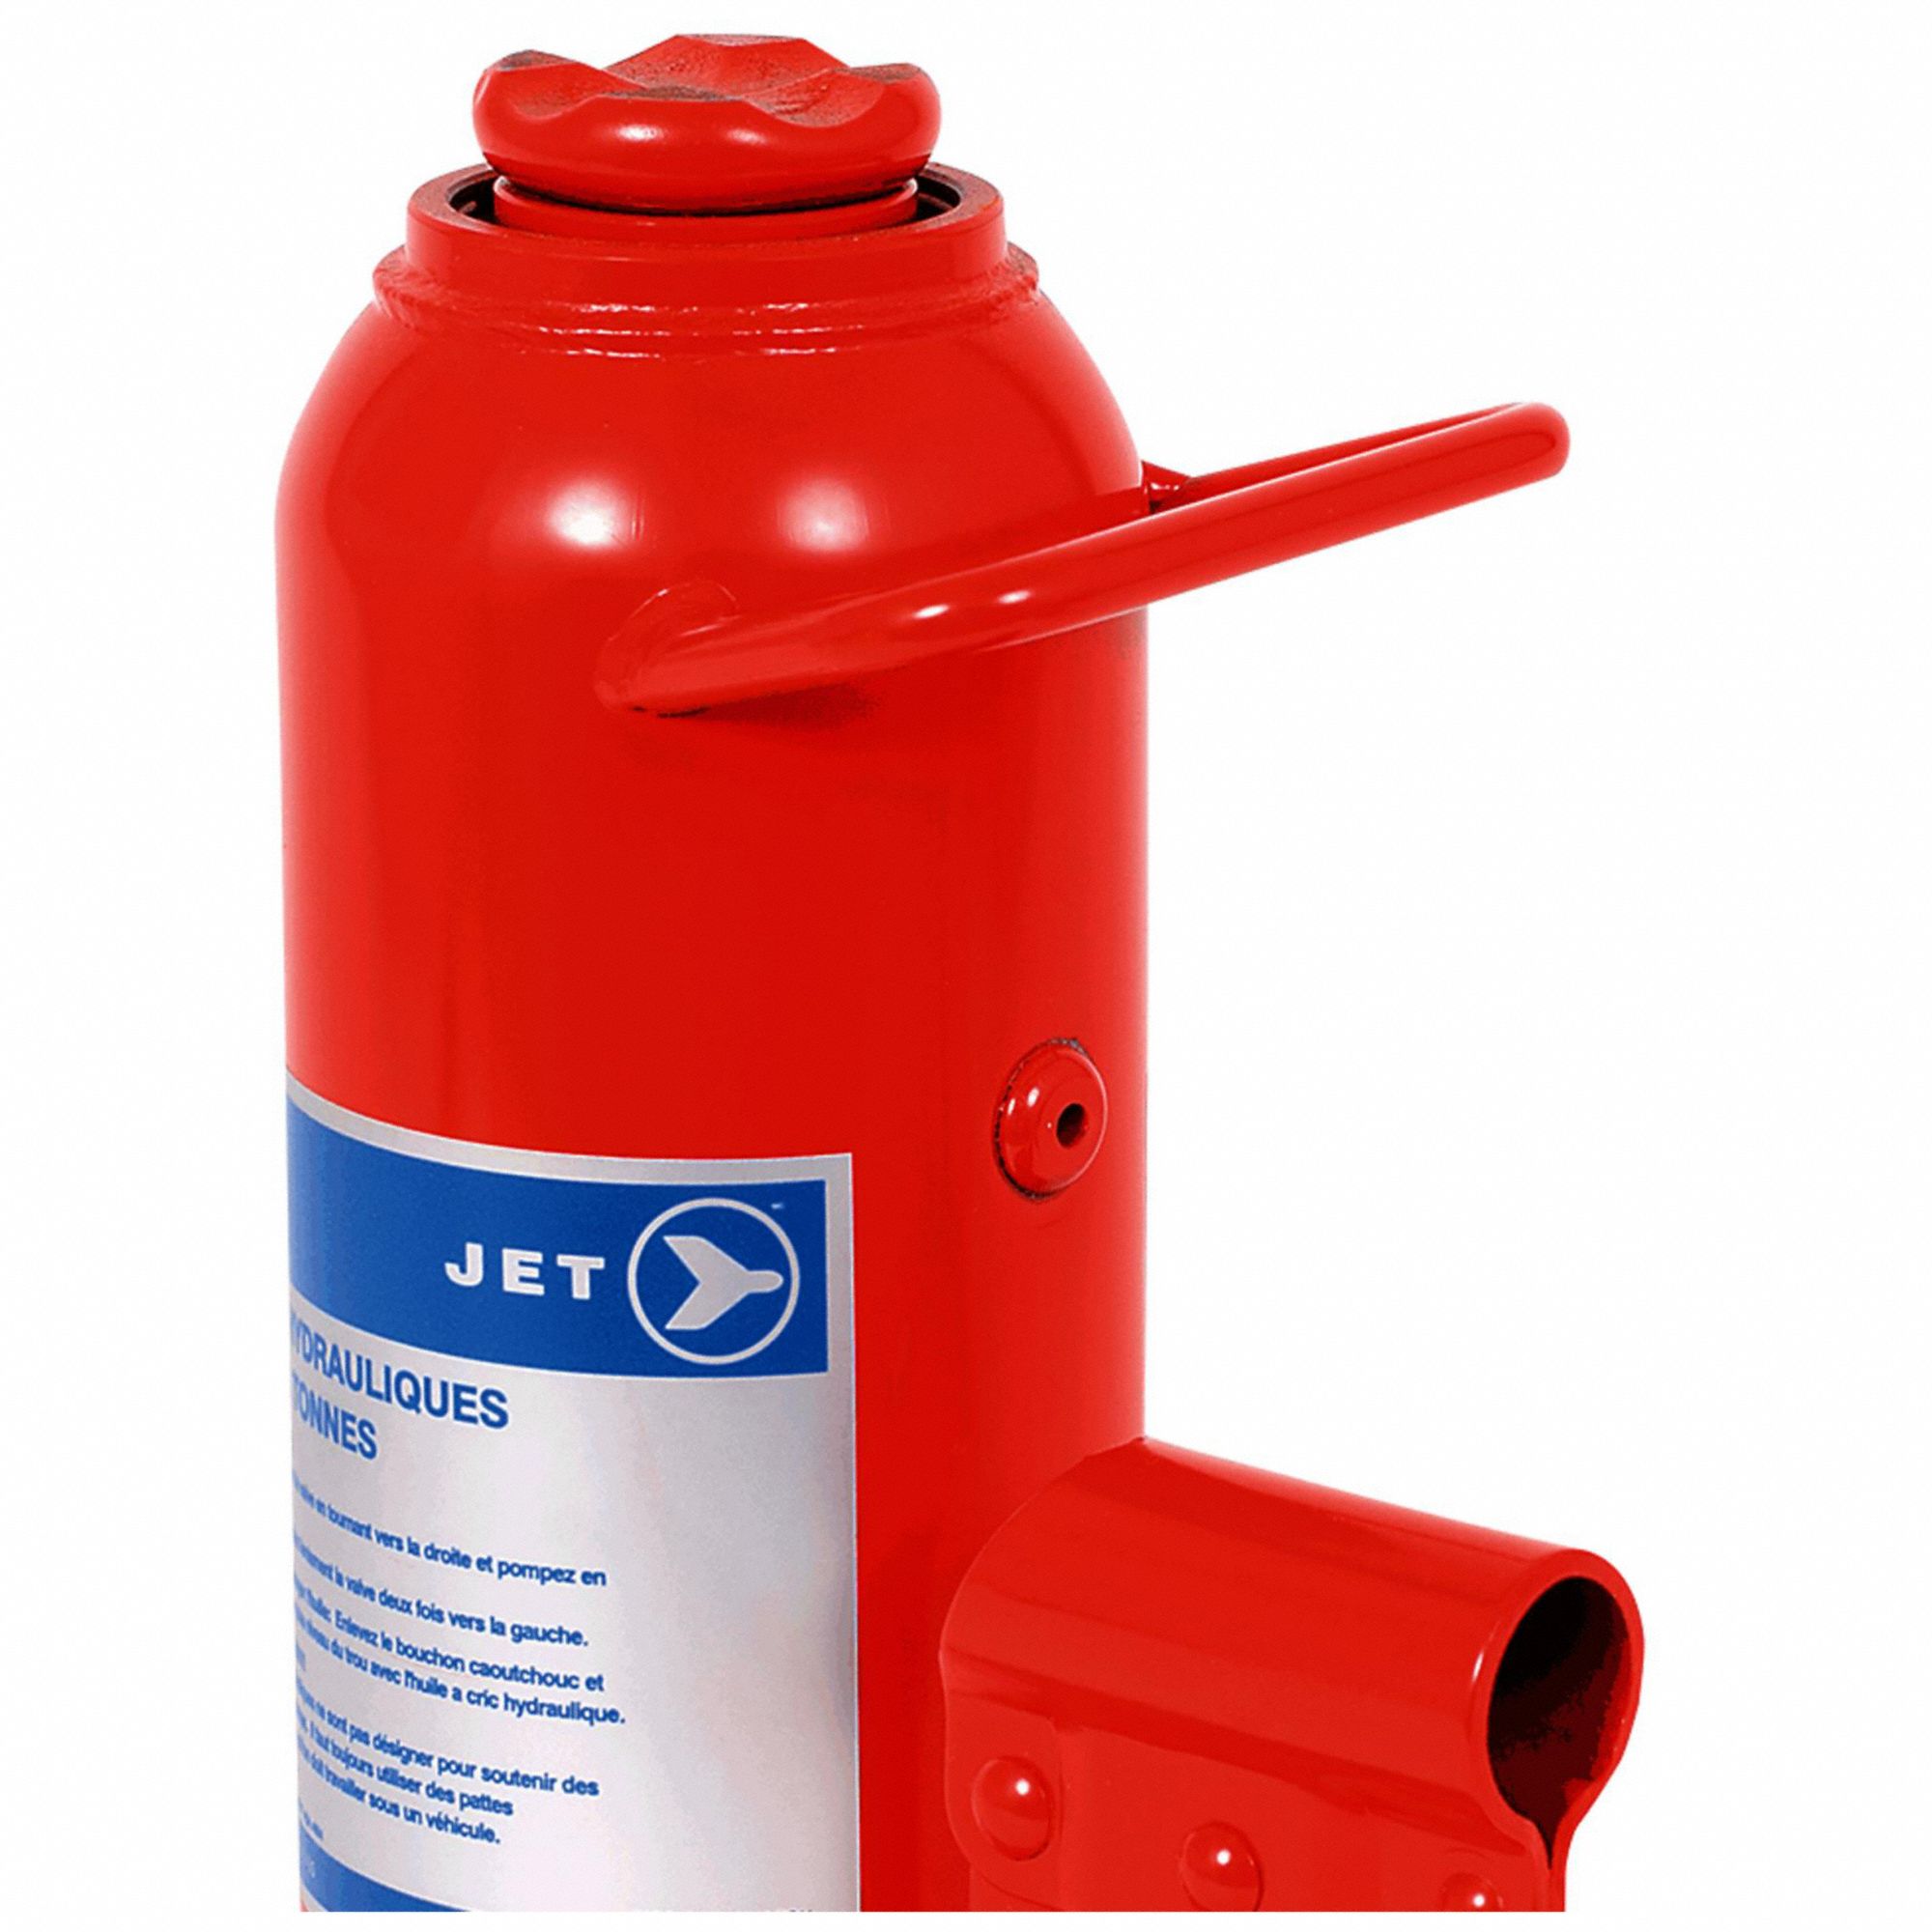 ENERPAC-GBJ030A Bottle Jack, 30 Ton